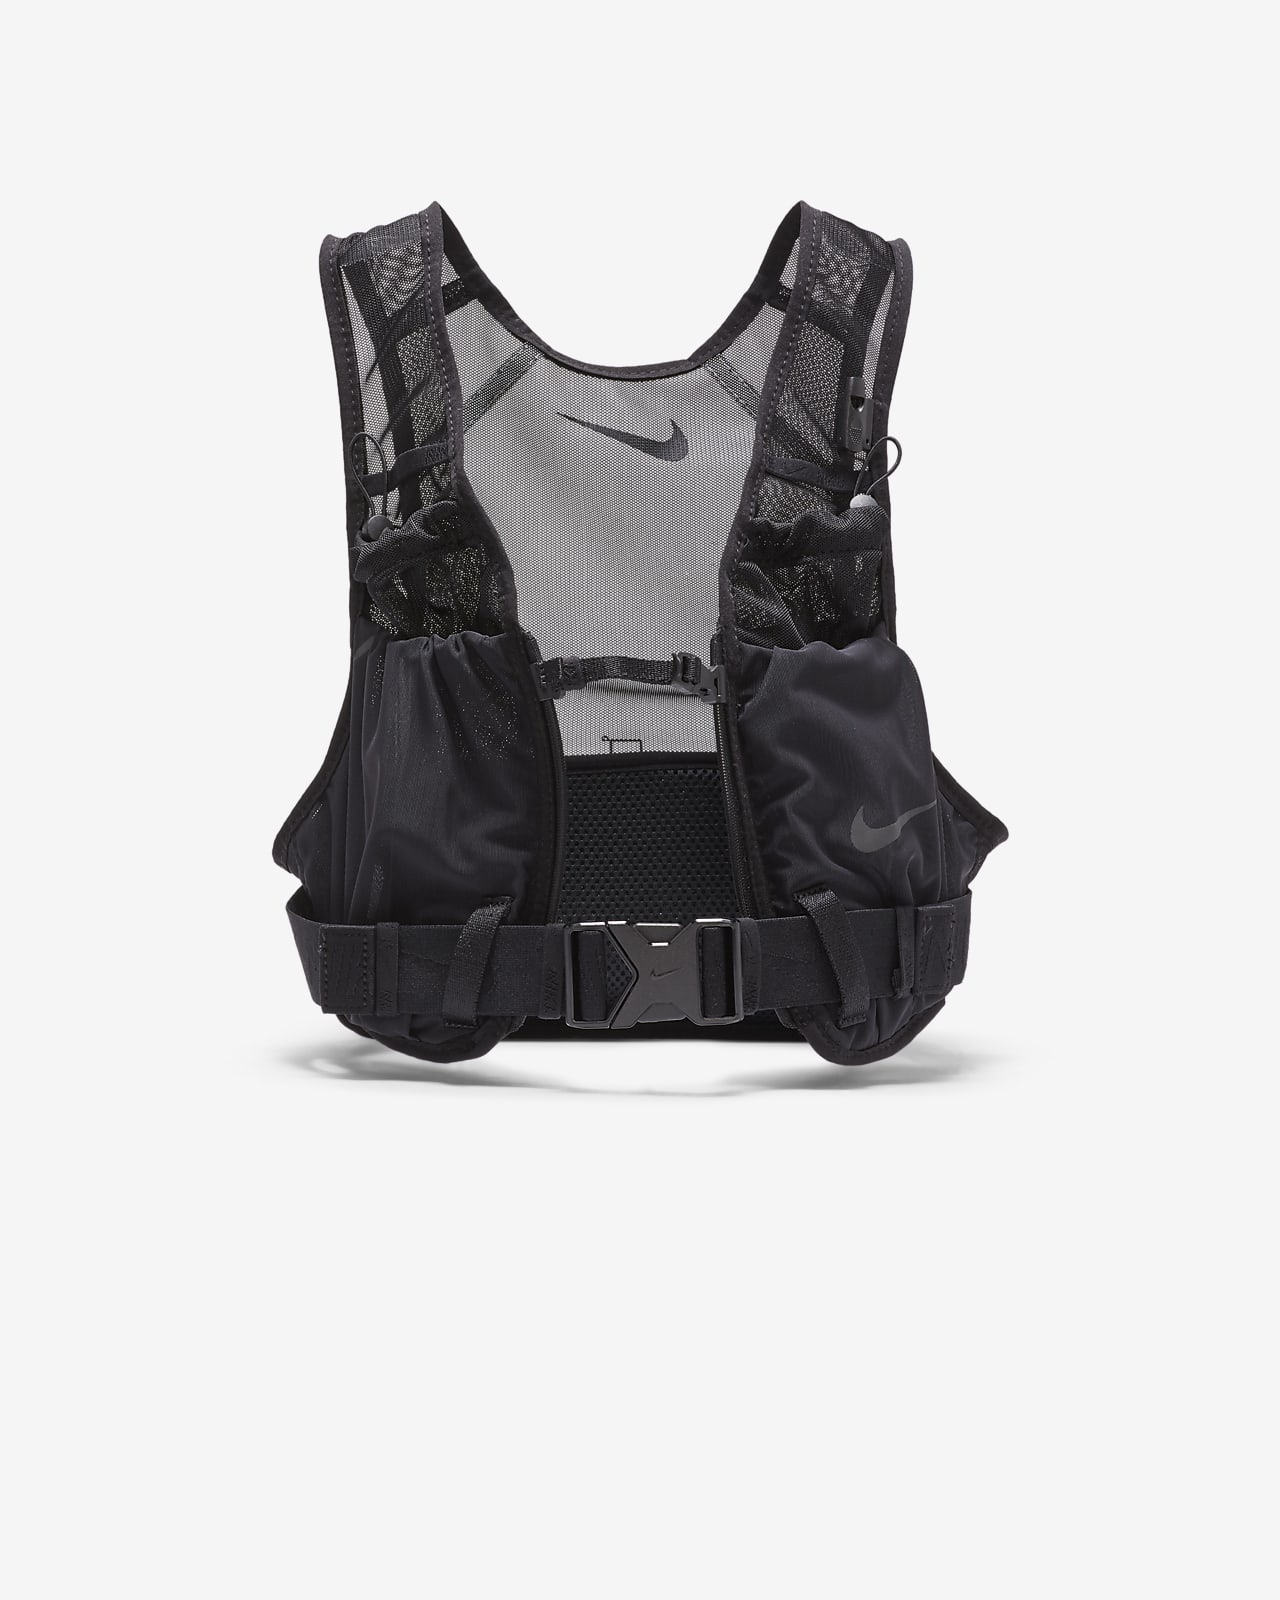 Nike Transform Packable Running Gilet